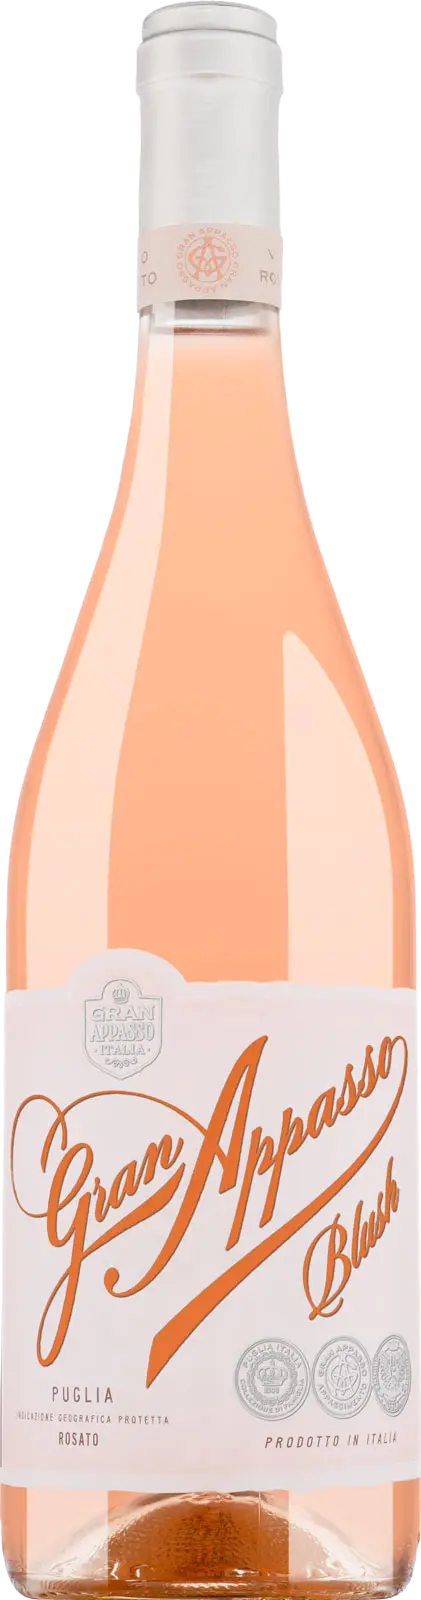 Gran Appasso Blush Rosé IGP (2017)_Femar Vini